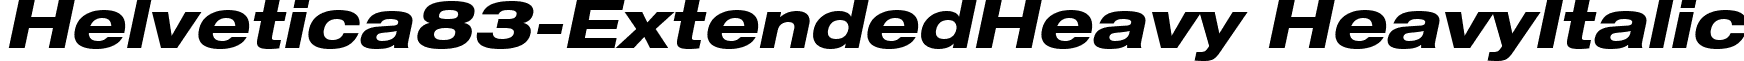 Helvetica83-ExtendedHeavy HeavyItalic font - Helvetica83-ExtendedHeavy Oblique.ttf